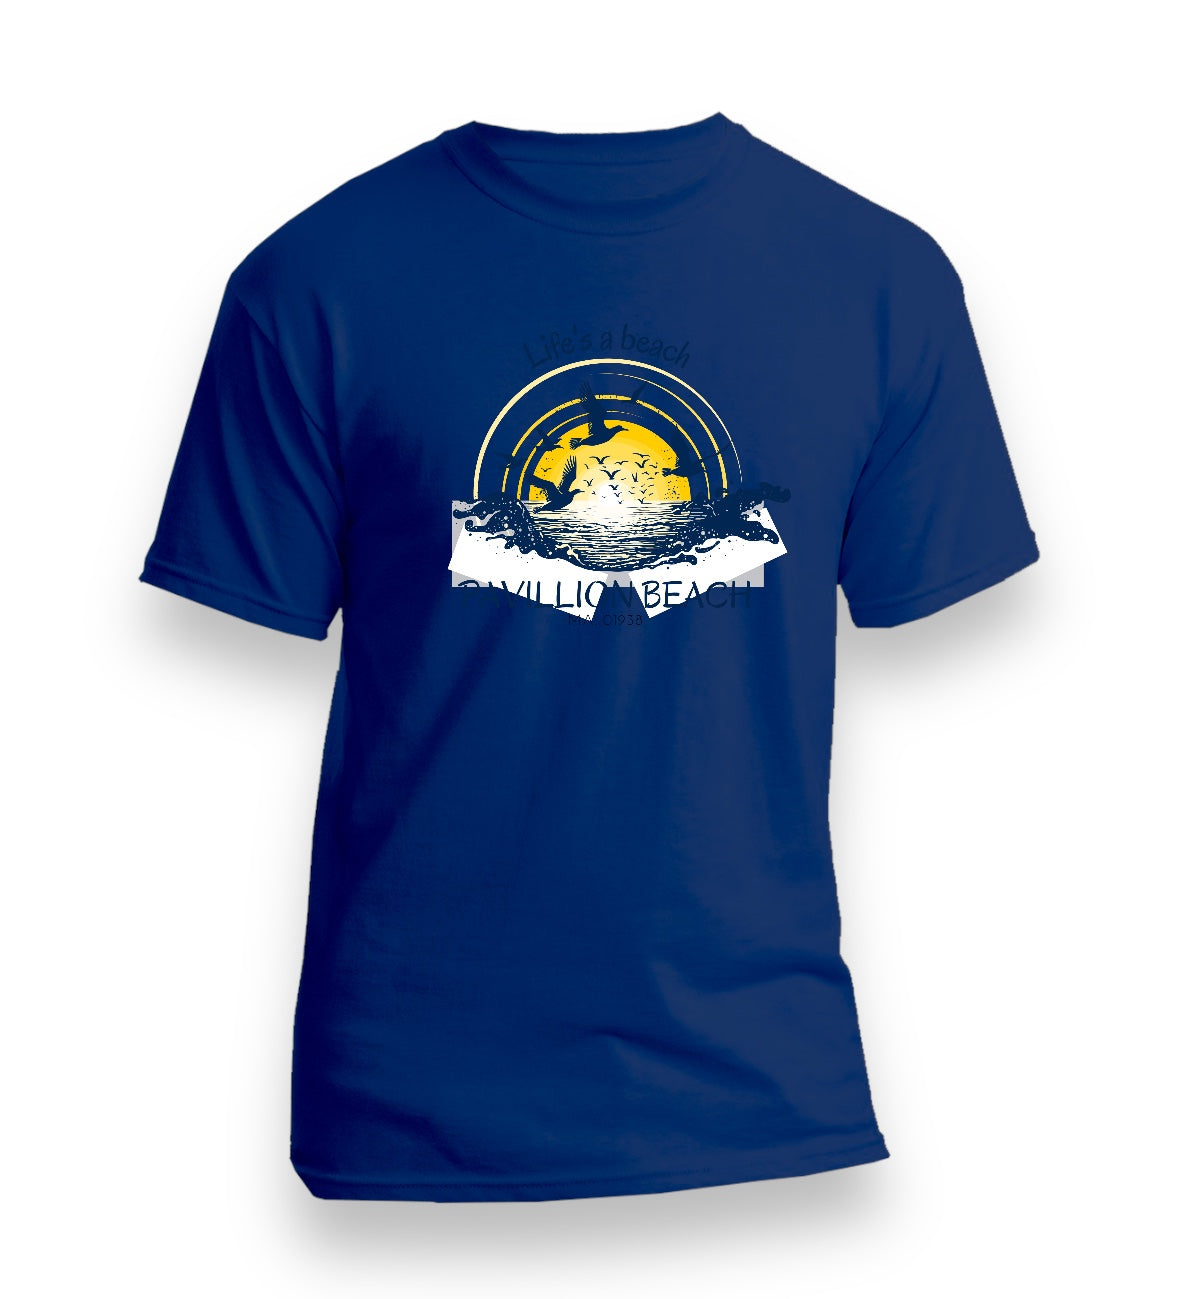 Pavilion Beach Horizon T-shirts (Adults)